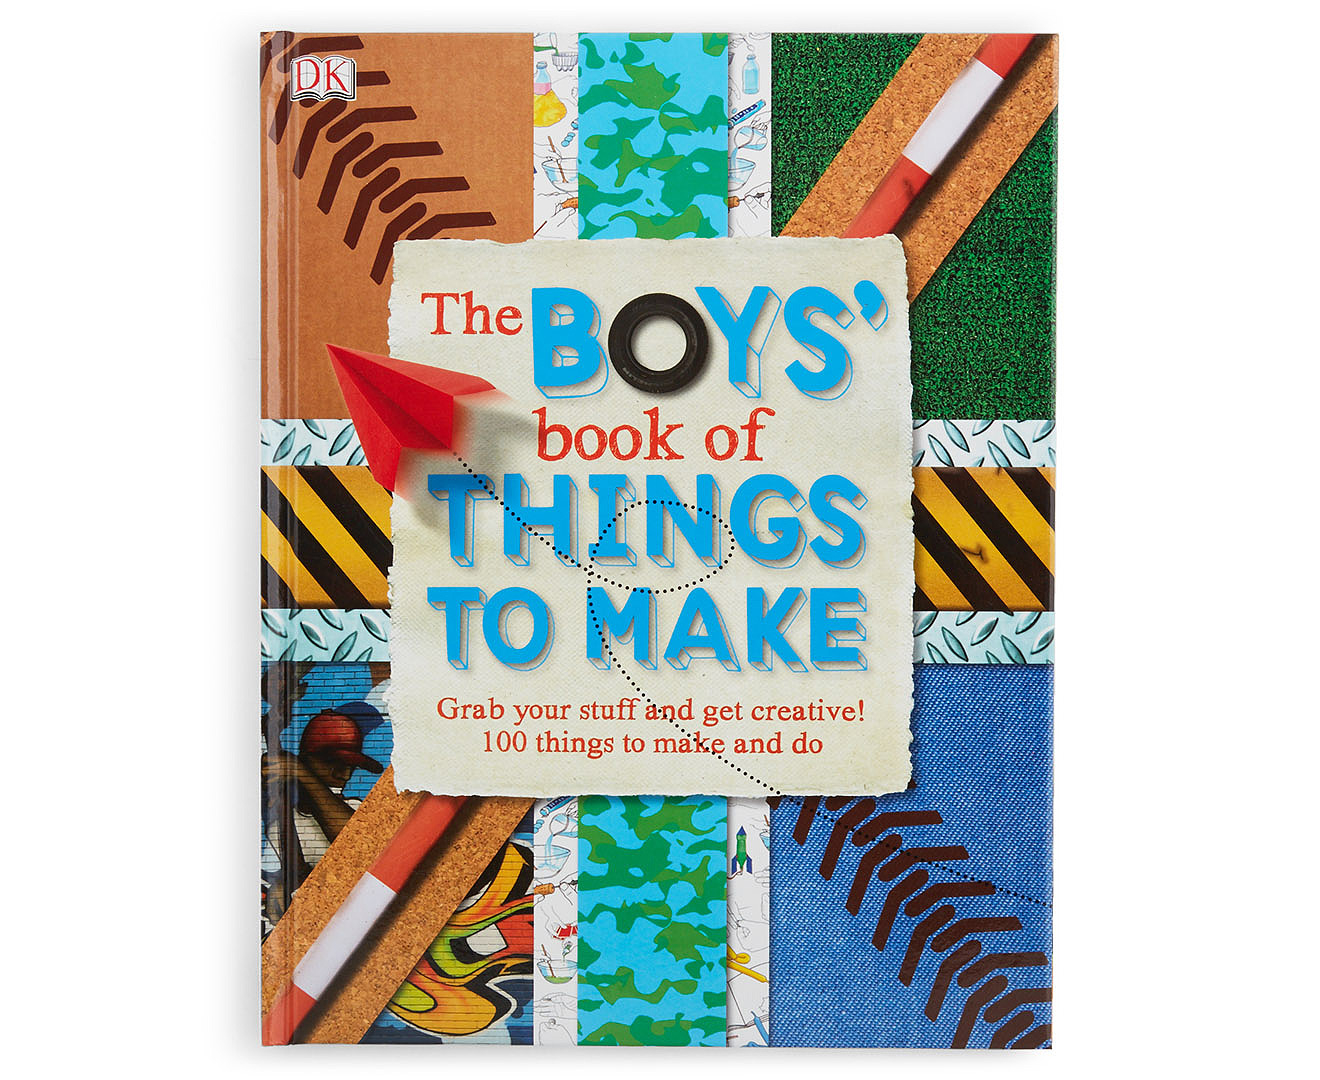 Boy книга. A suitable boy книга. The book of boy. Jo's boys книга.